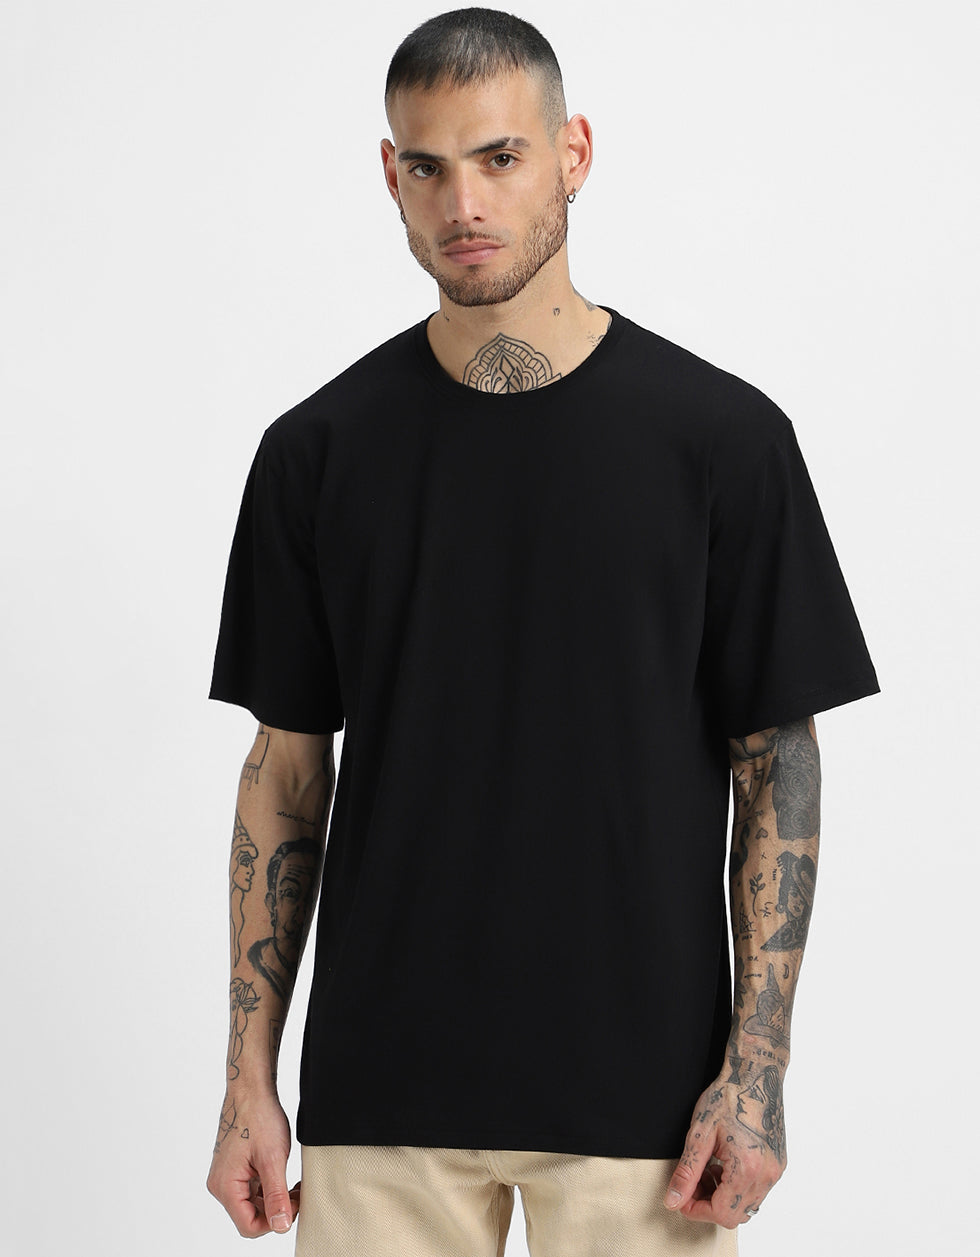 CHAOS Oversized Black Graphic  Back Printed Tshirt